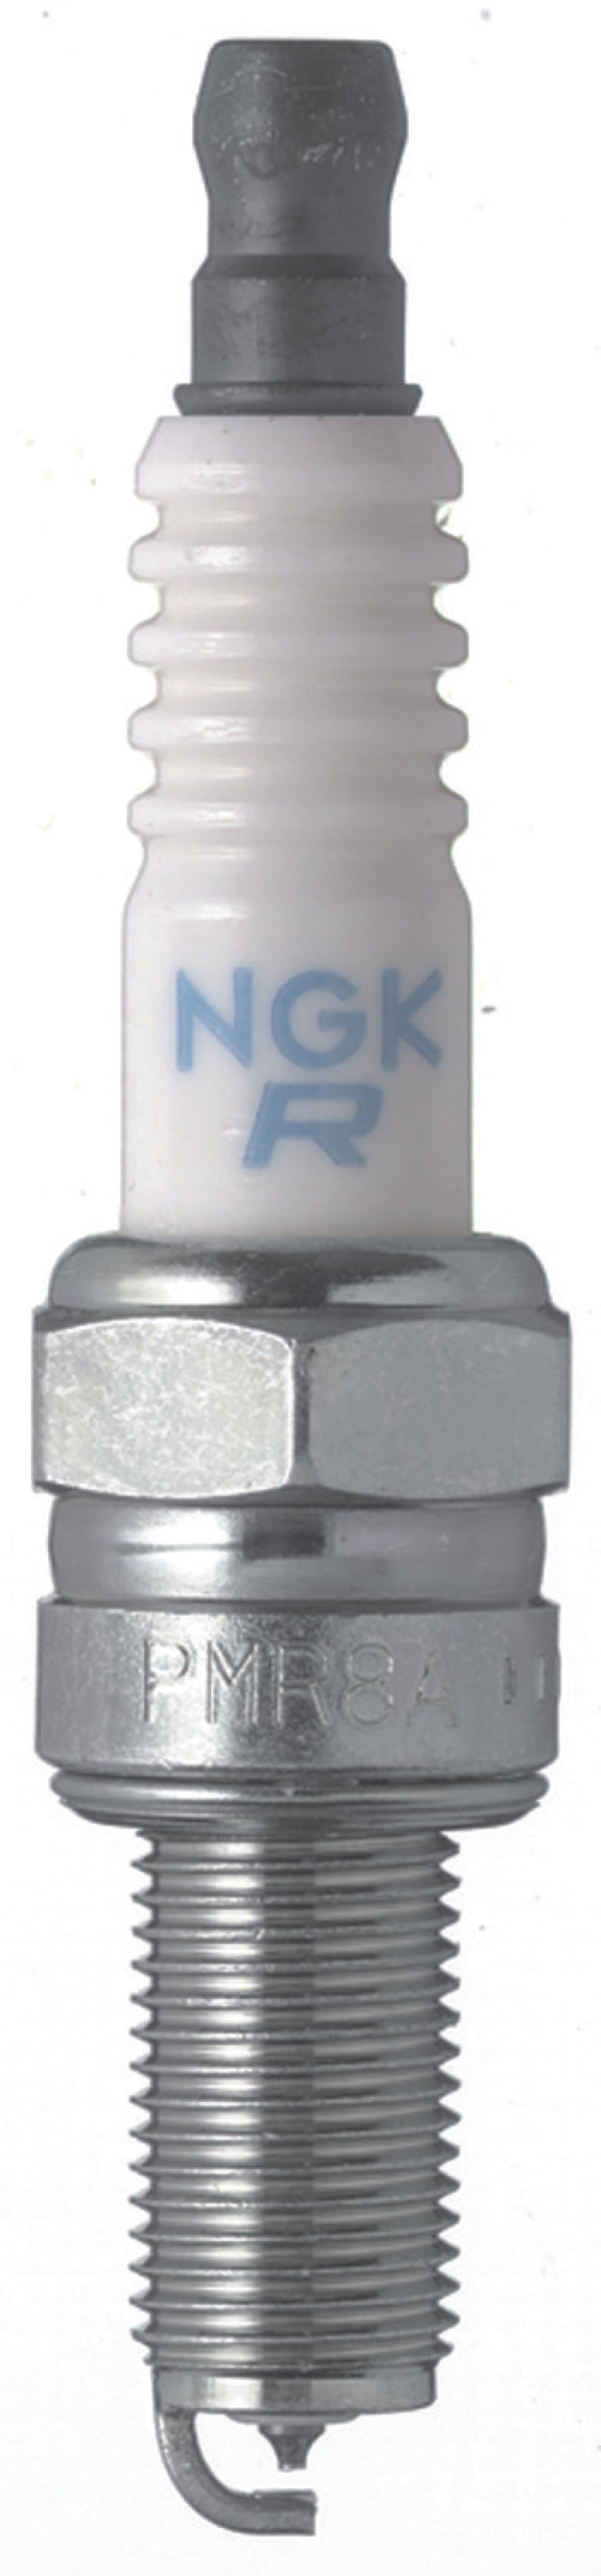 NGK Nickel Spark Plug Box of 4 (CR9EB) -  Shop now at Performance Car Parts